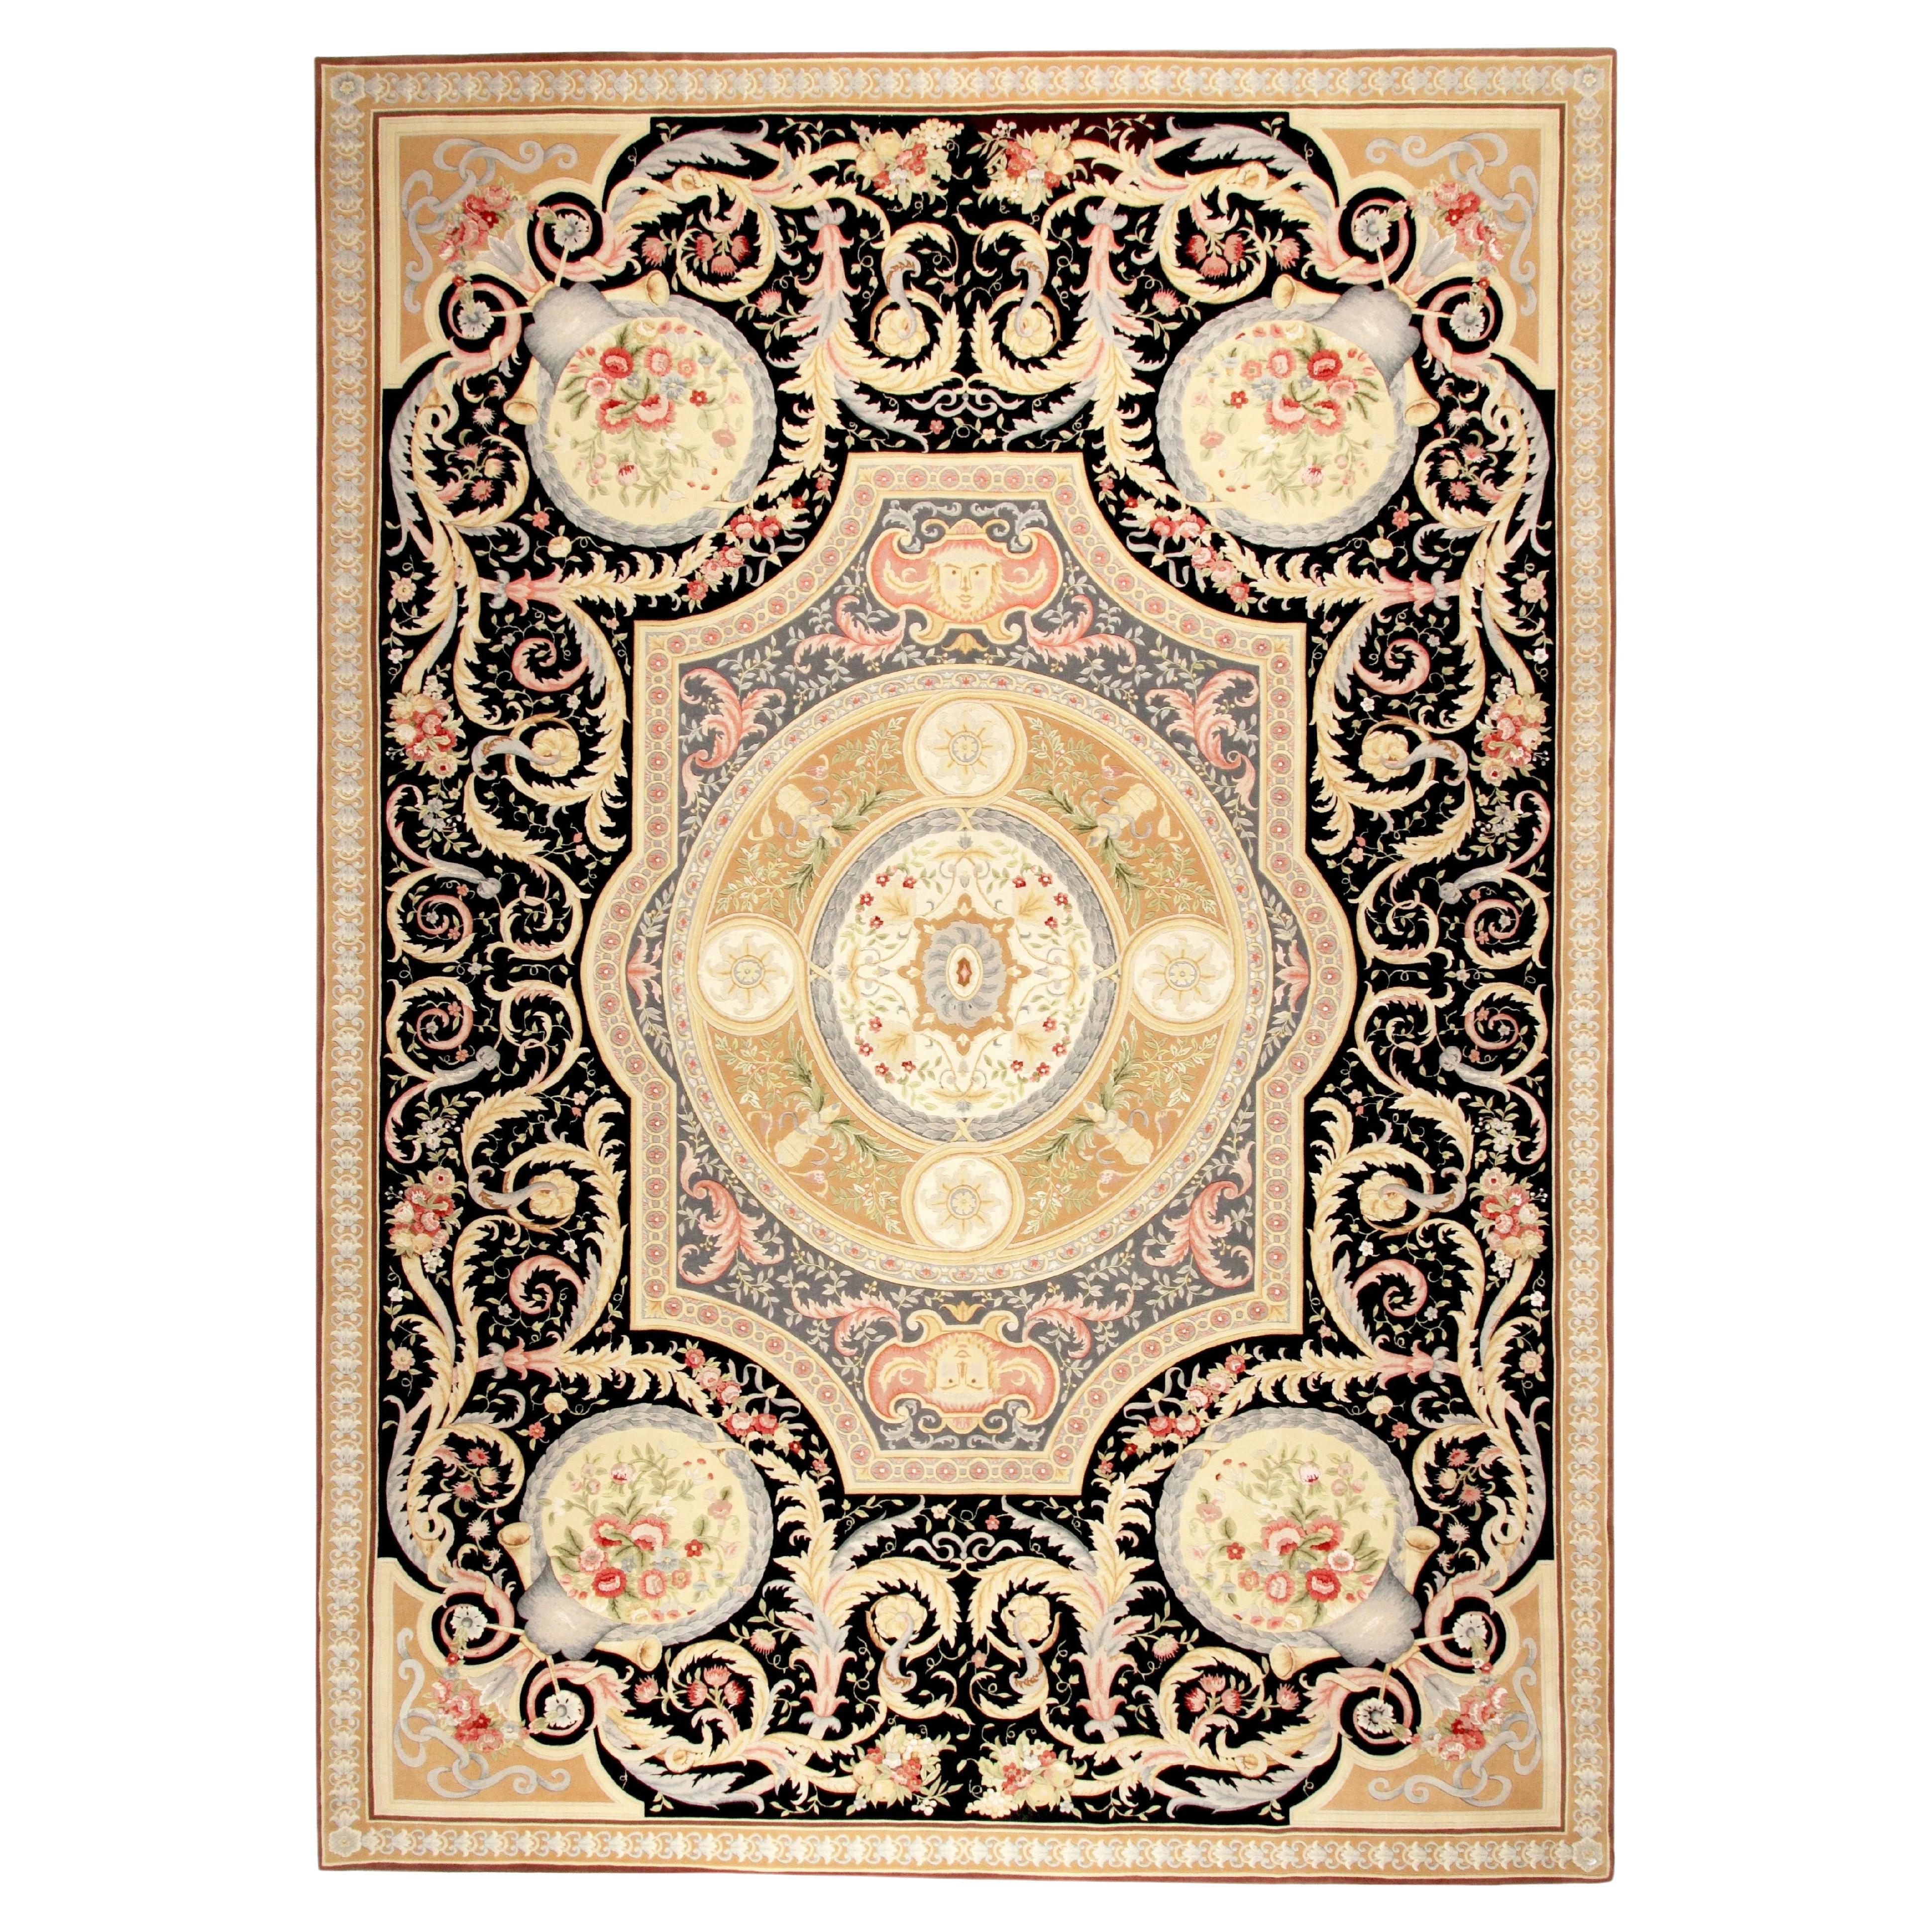 VIA COMO 'Grandioso' Rug Hand Knotted Wool Silk Fine Carpet One of a Kind 10x14 